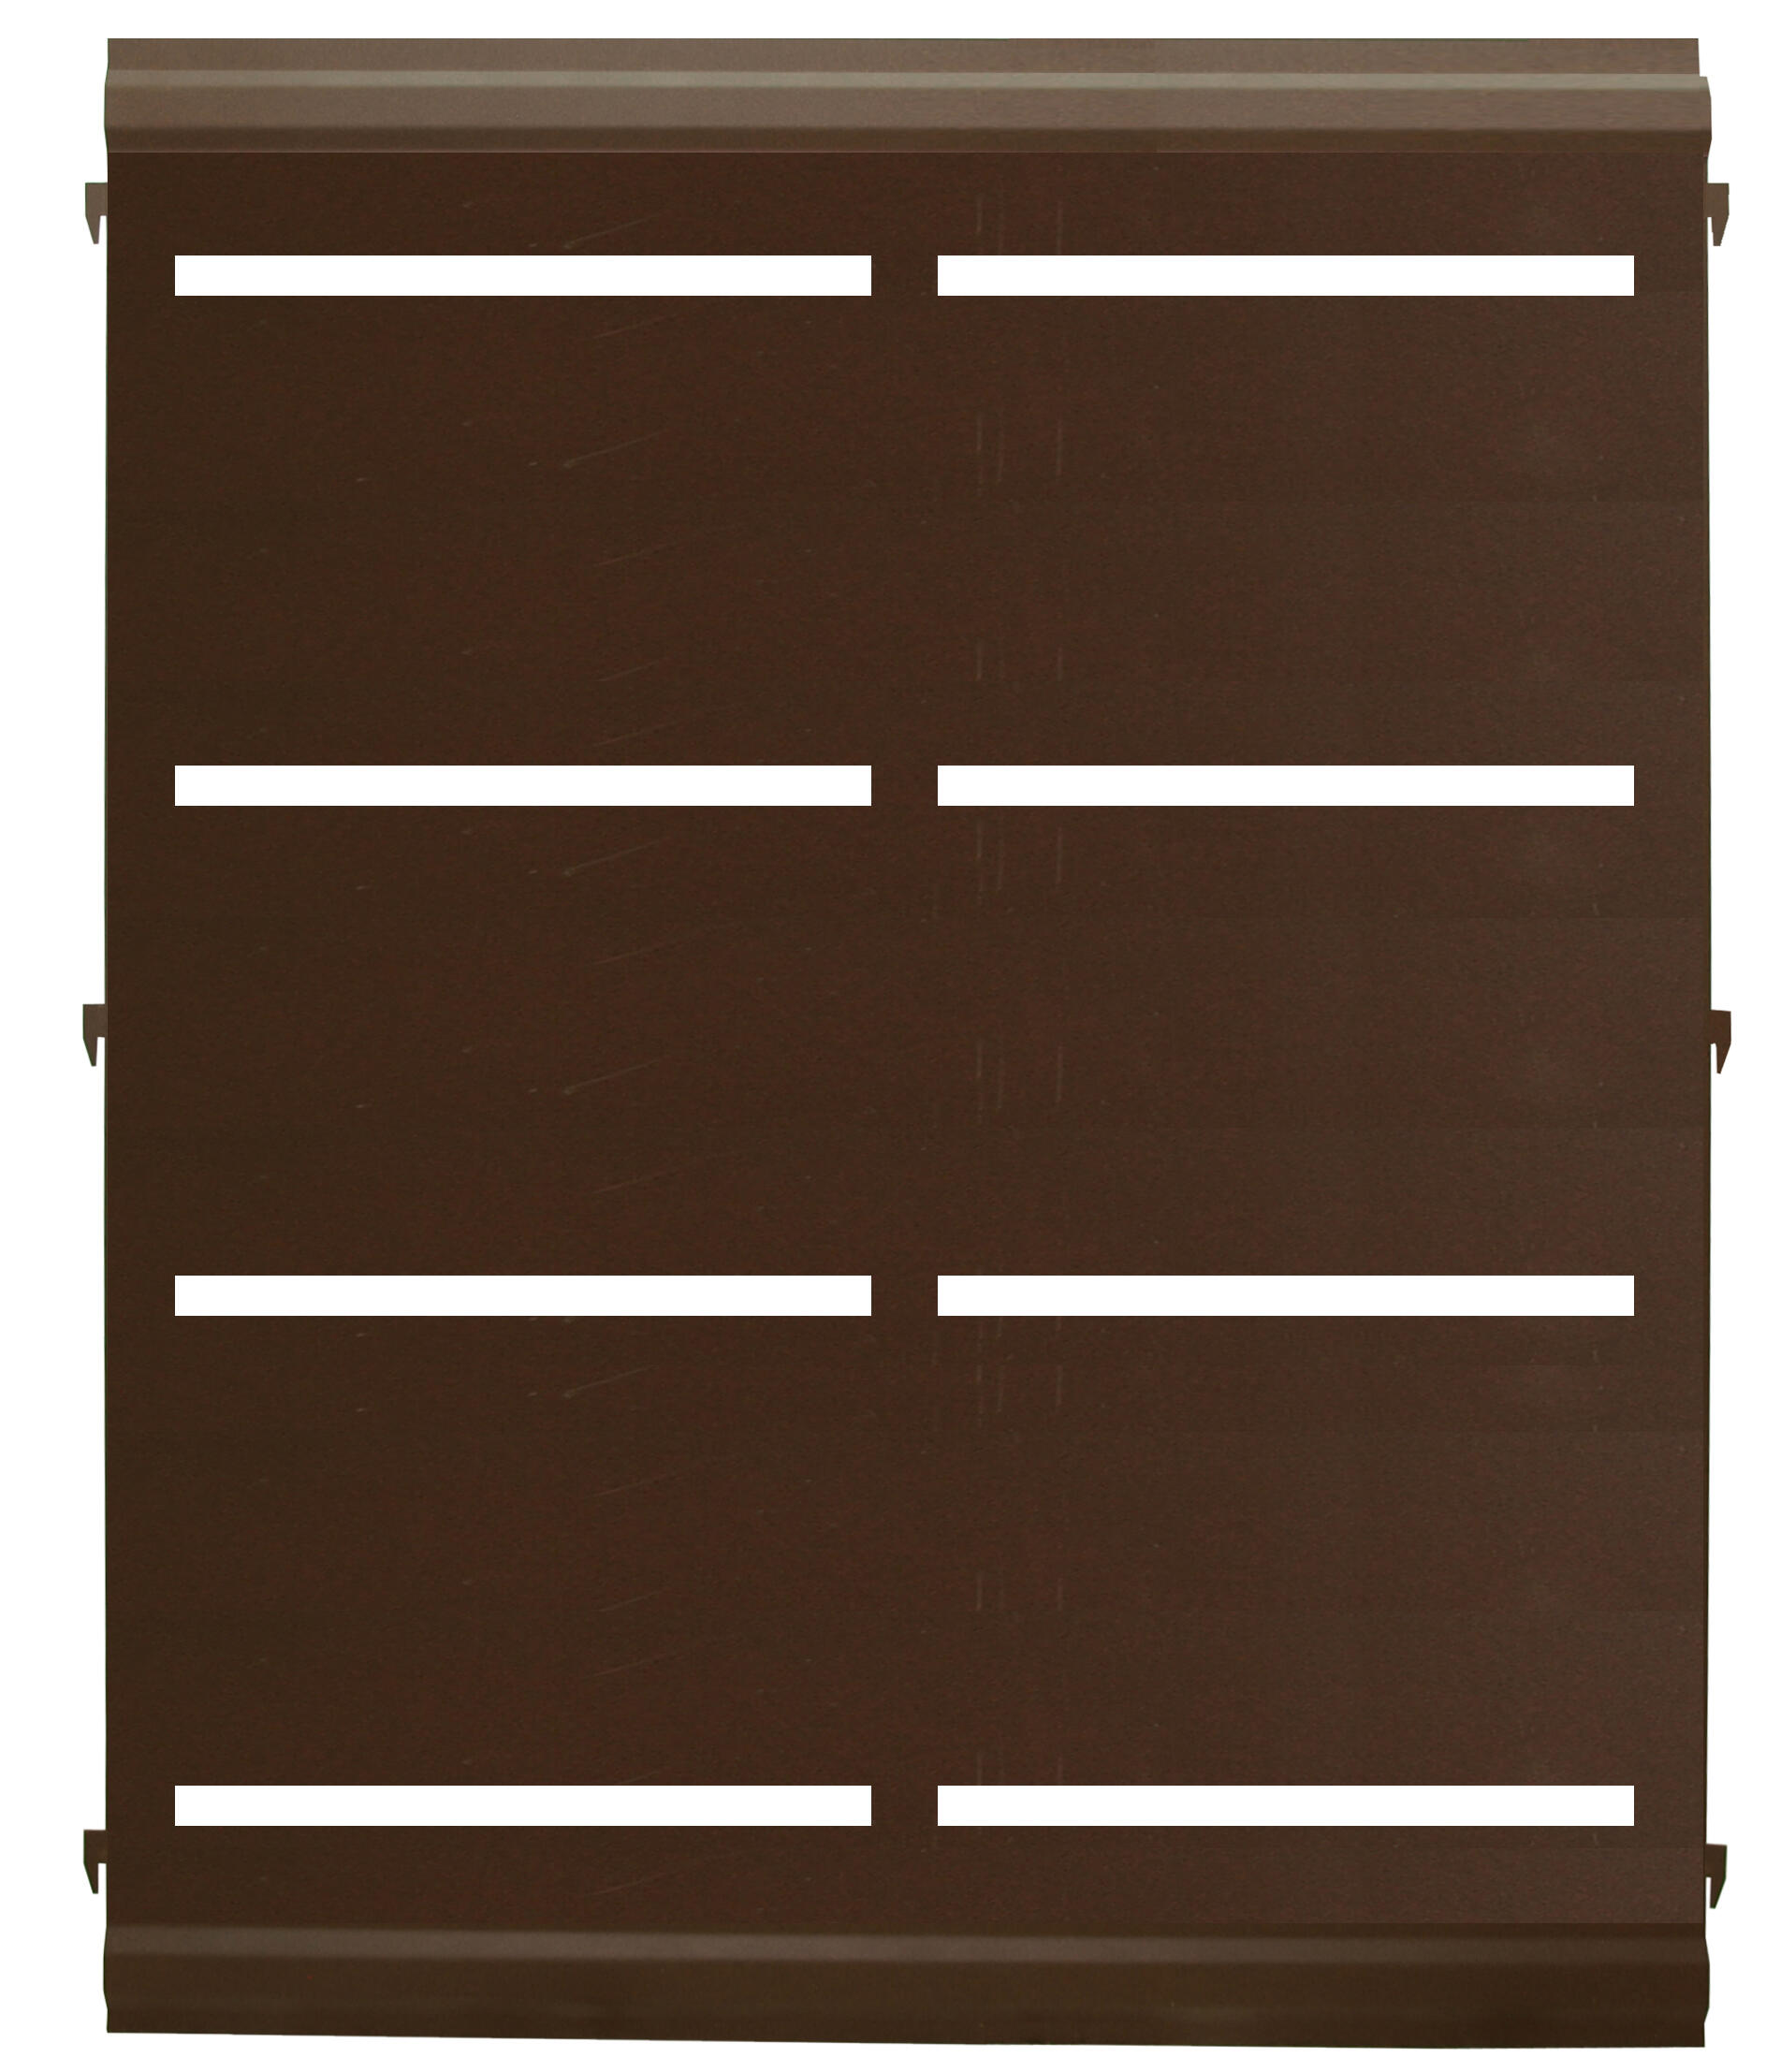 Panel remate valla acero galvanizado franja rayas marrón forja 94x73,5 cm